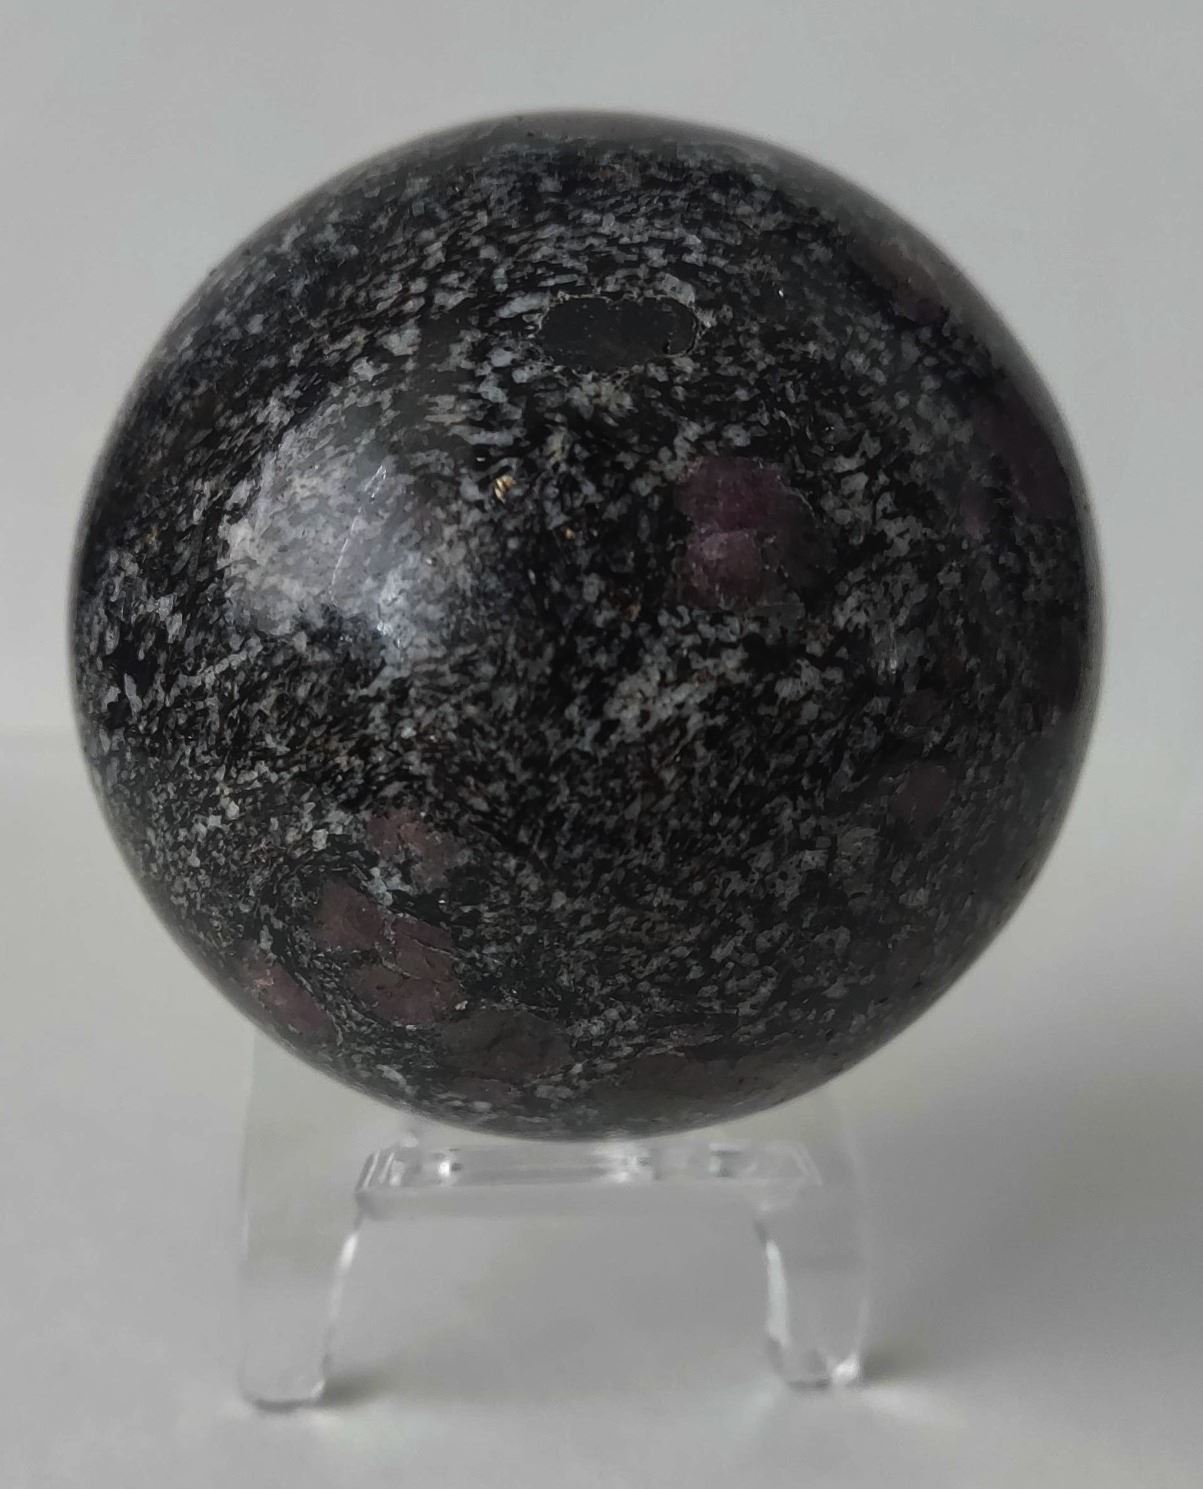 A Garnet Tourmaline sphere from South Africa